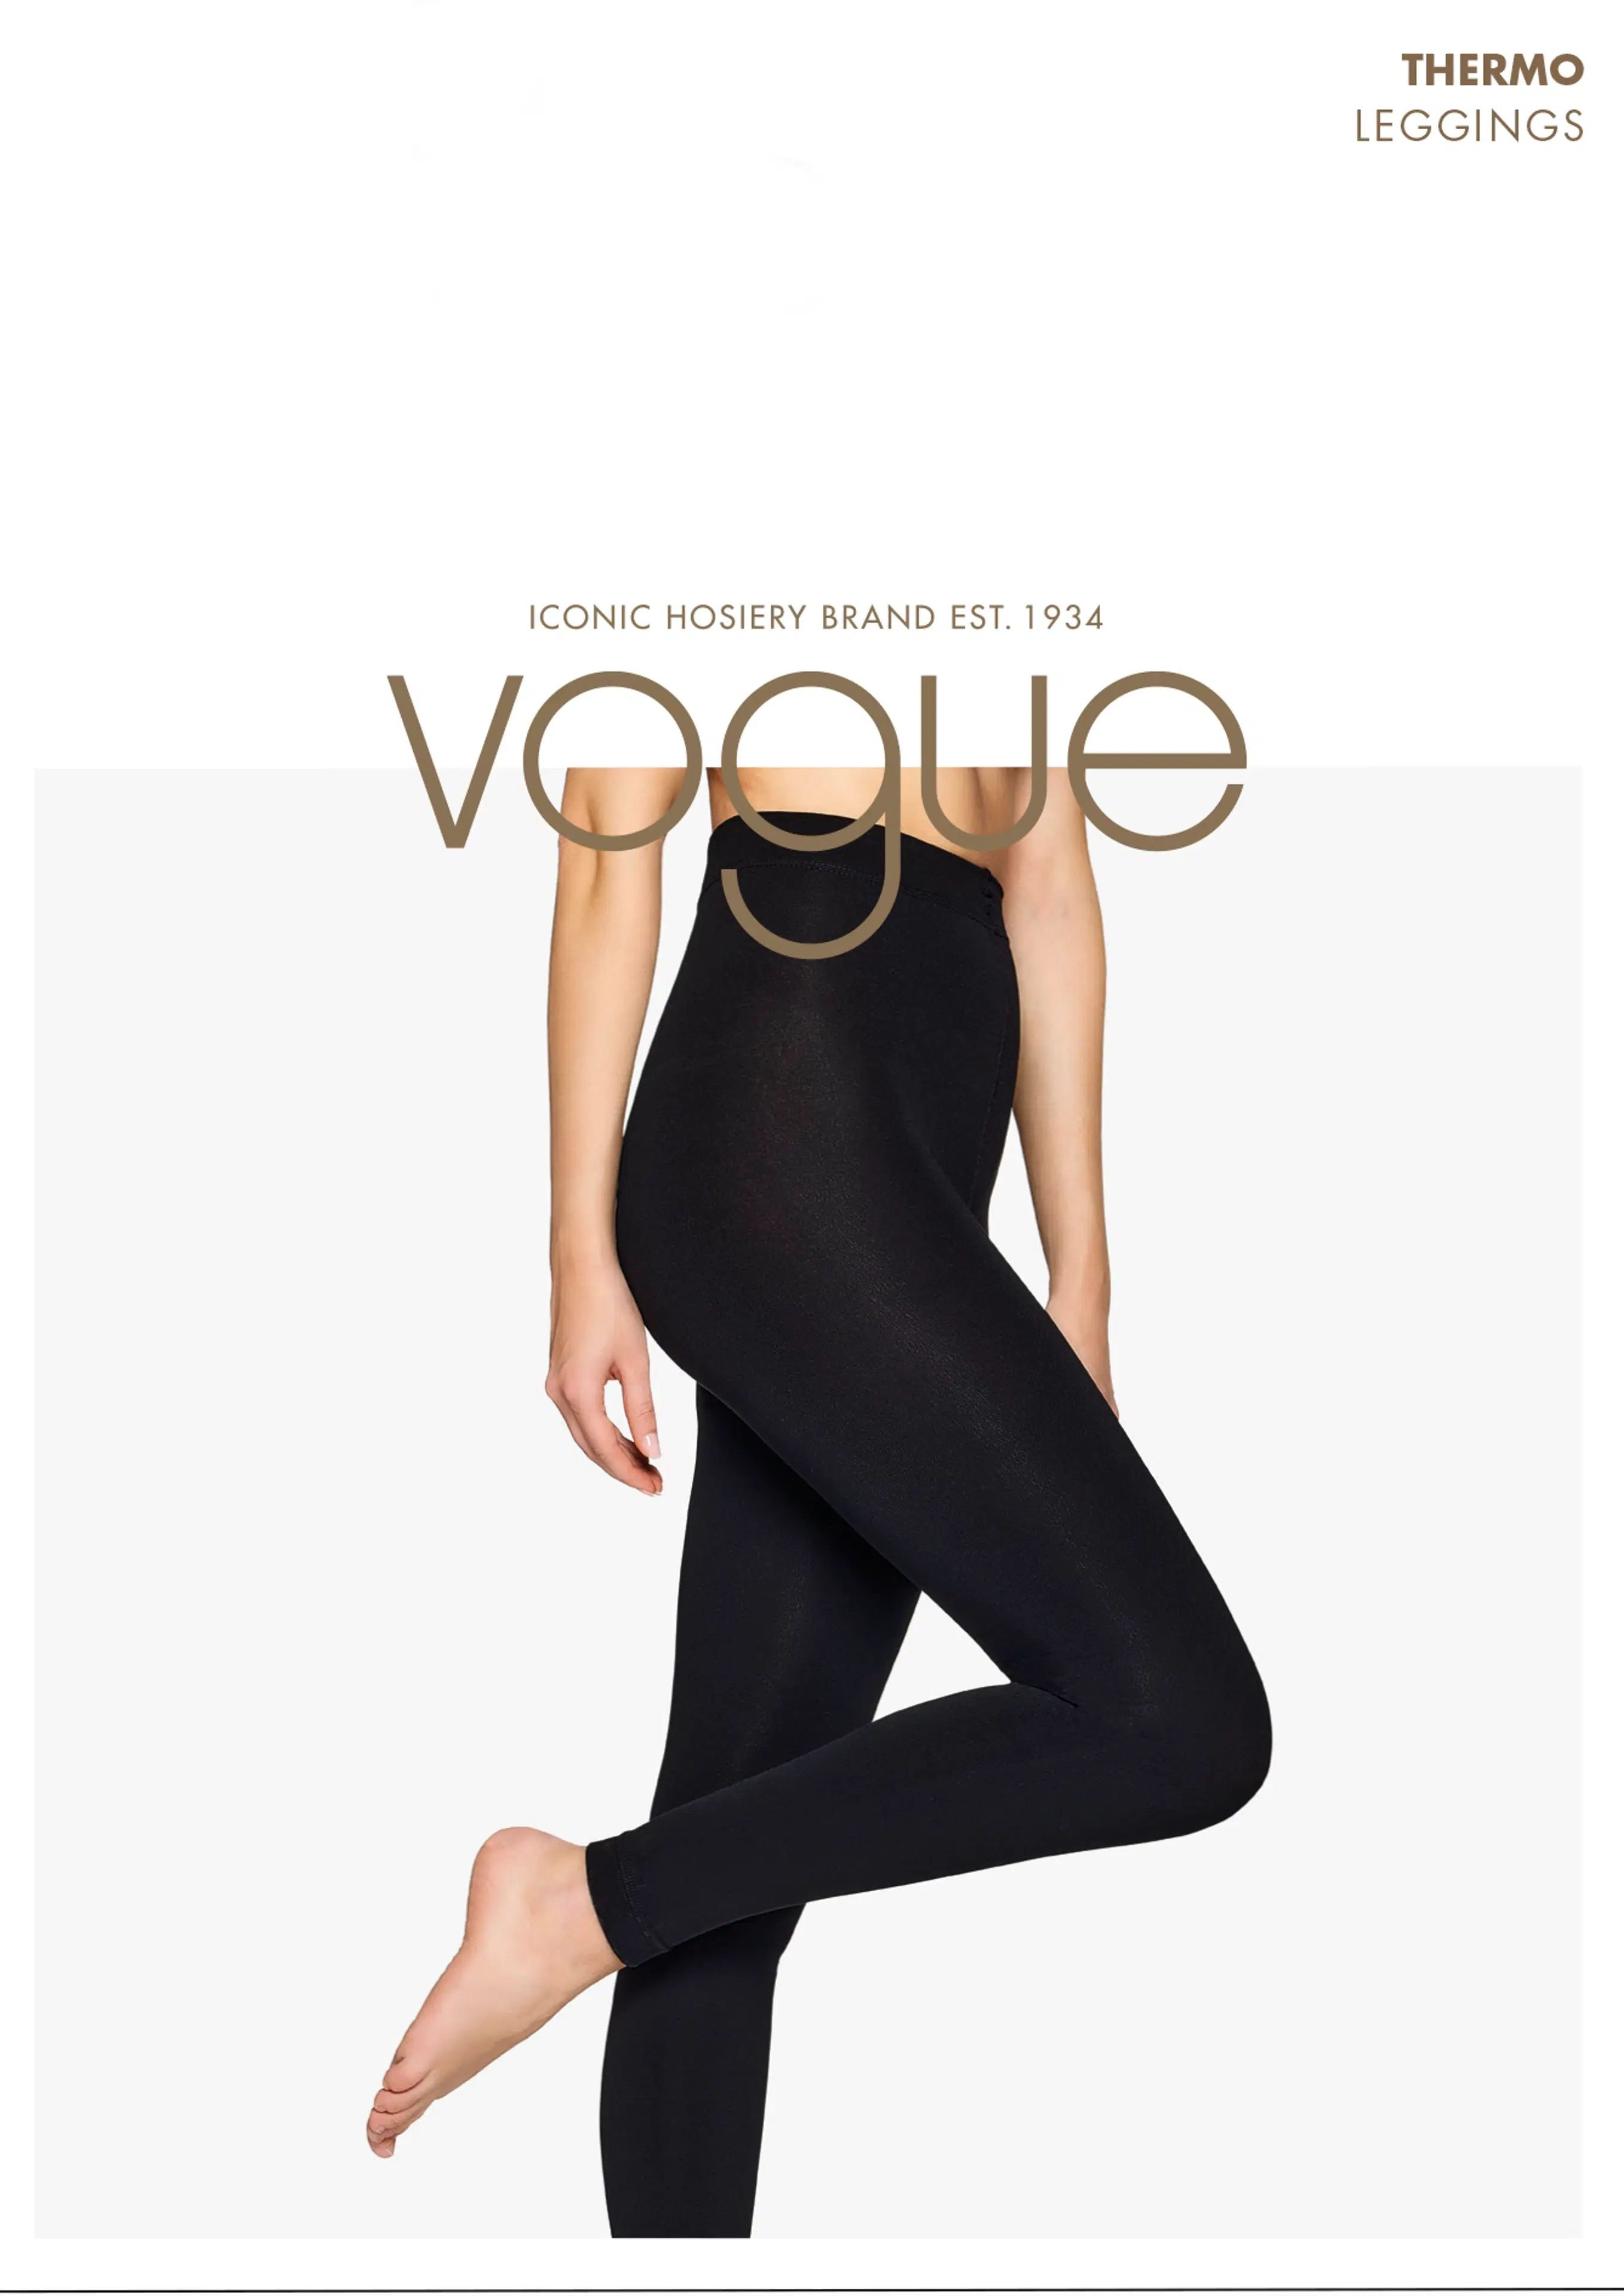 Vogue naisten Thermo leggingsit